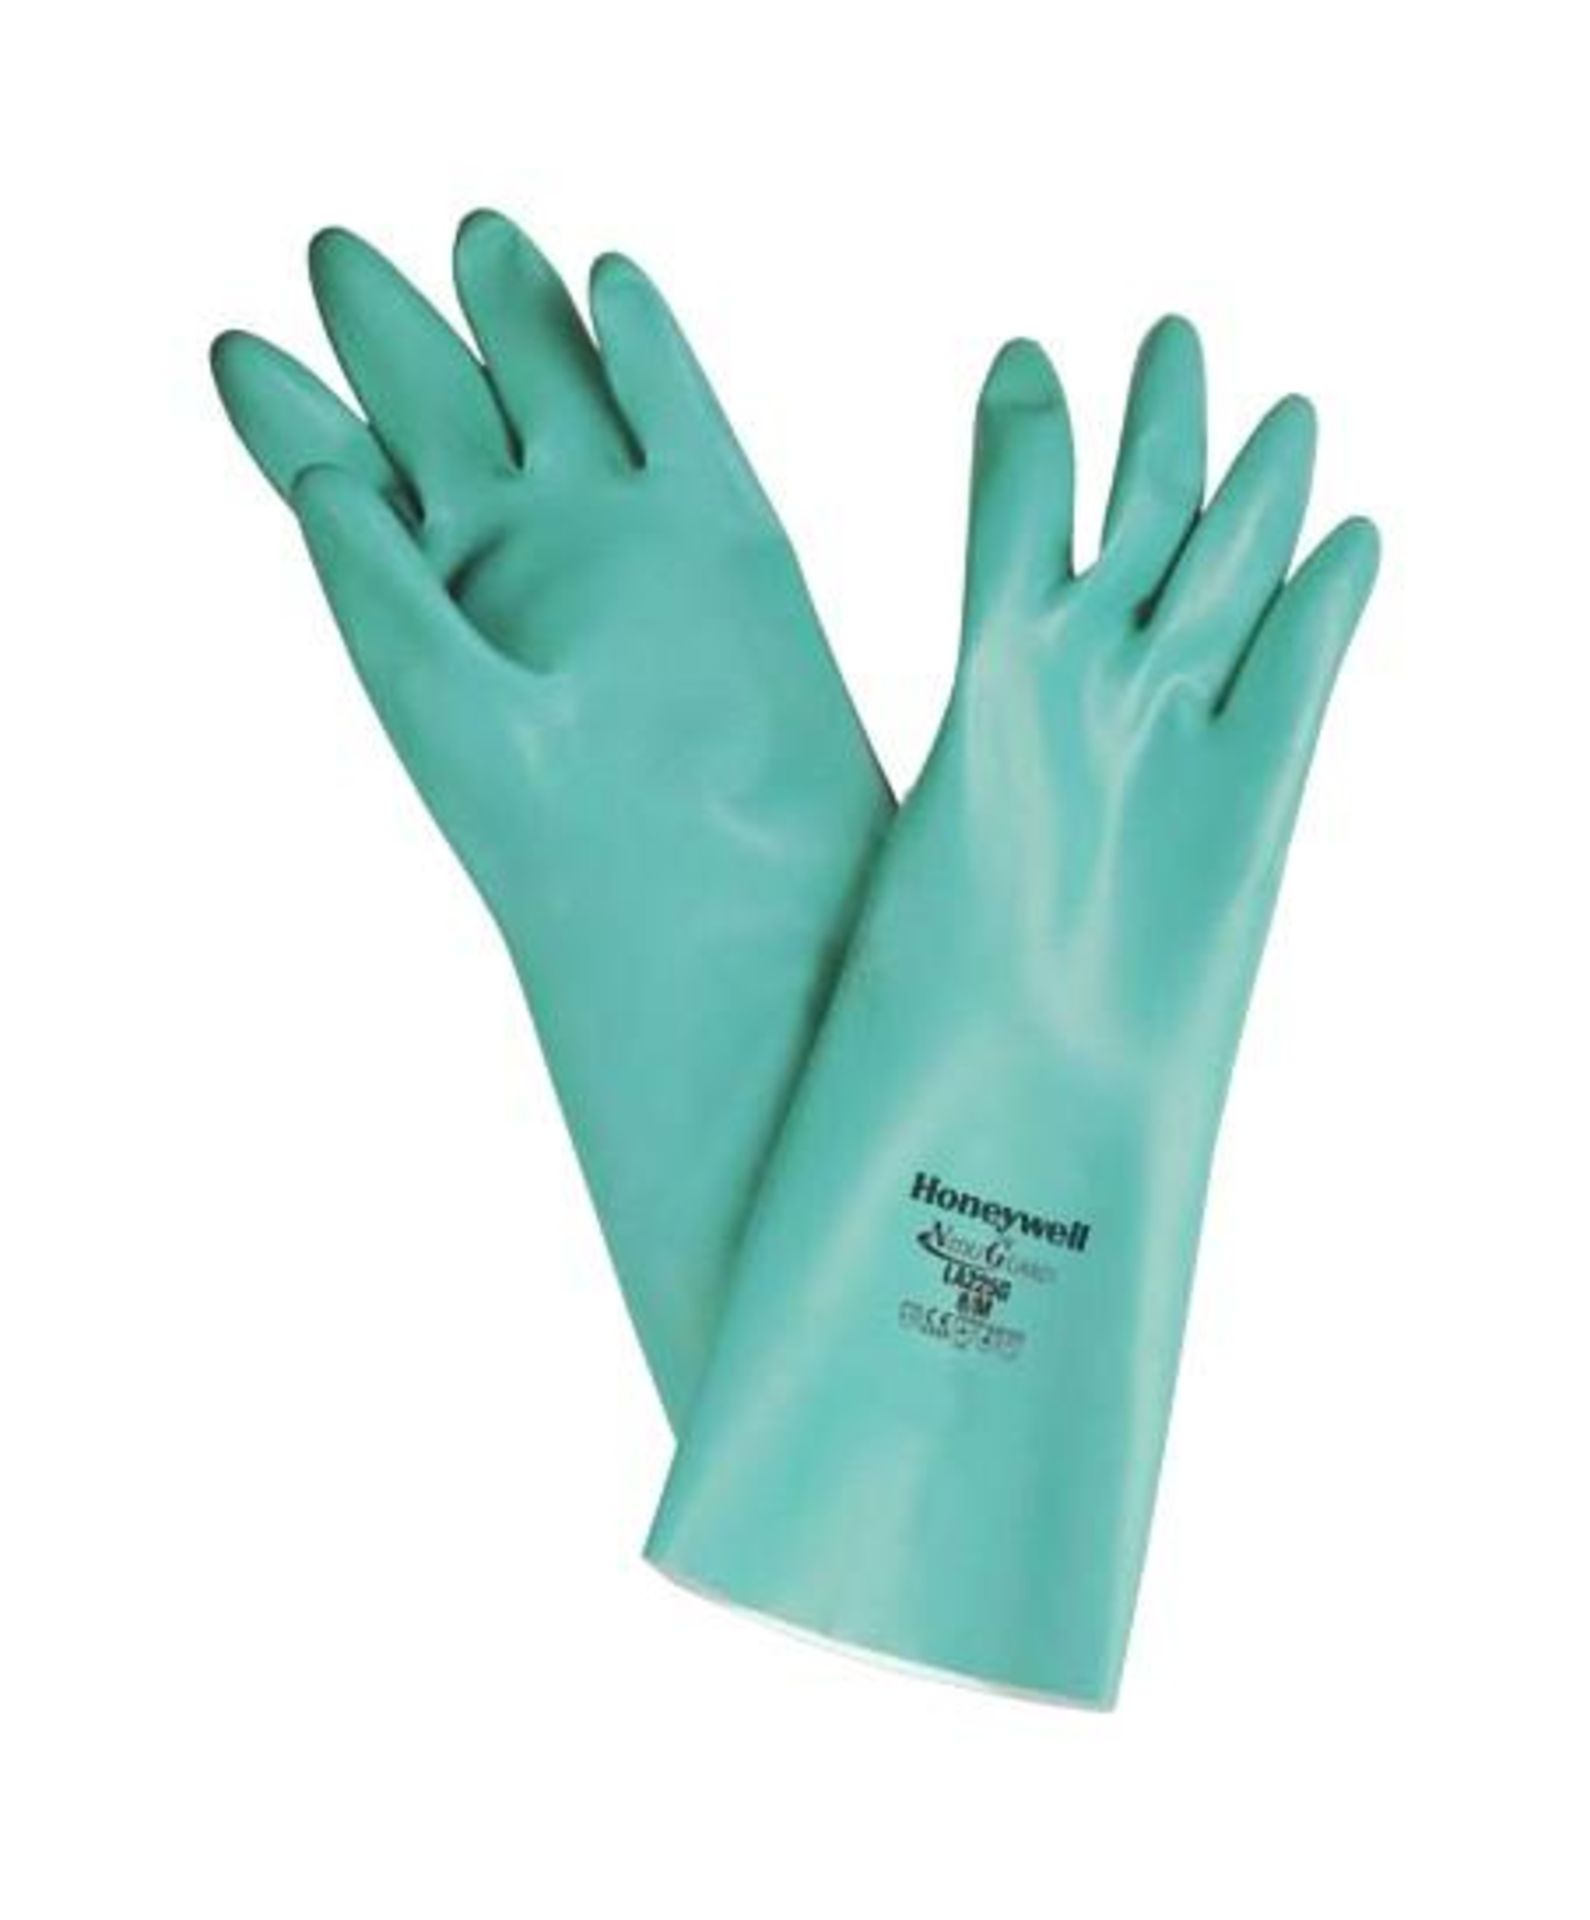 59 x Pairs of Nitri Guard Plus Protective Gloves 38cm Size 10 - CL185 - Ref: NO/LA225G/10/P20 -